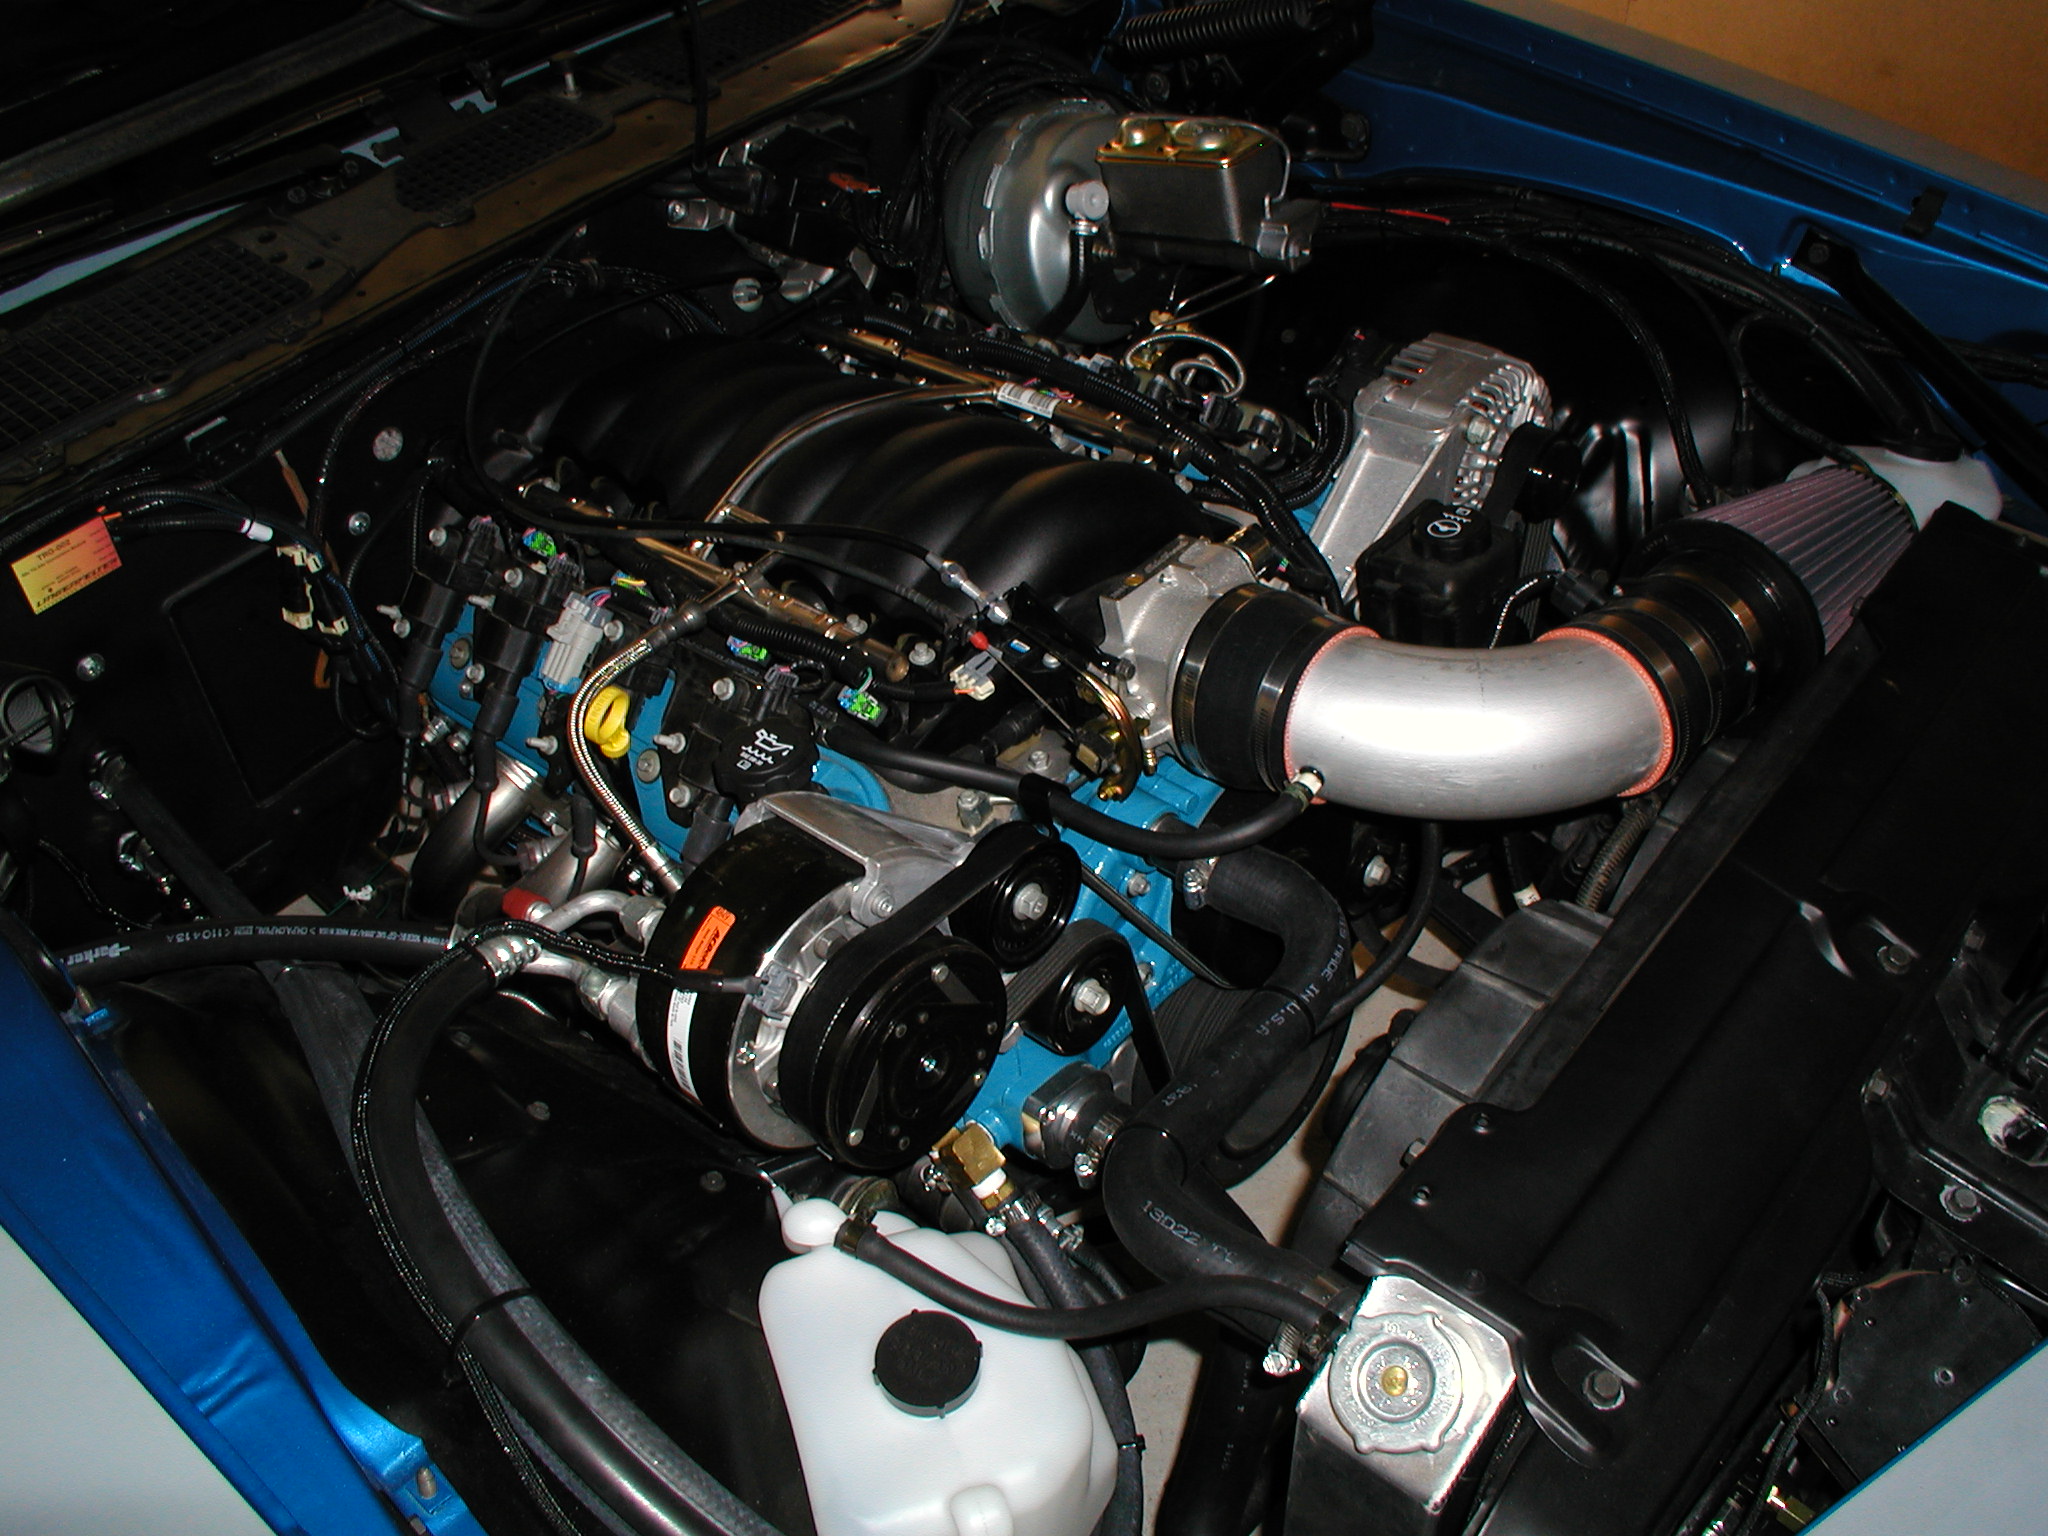 Camaro engine bay 3-14-2014 10.JPG